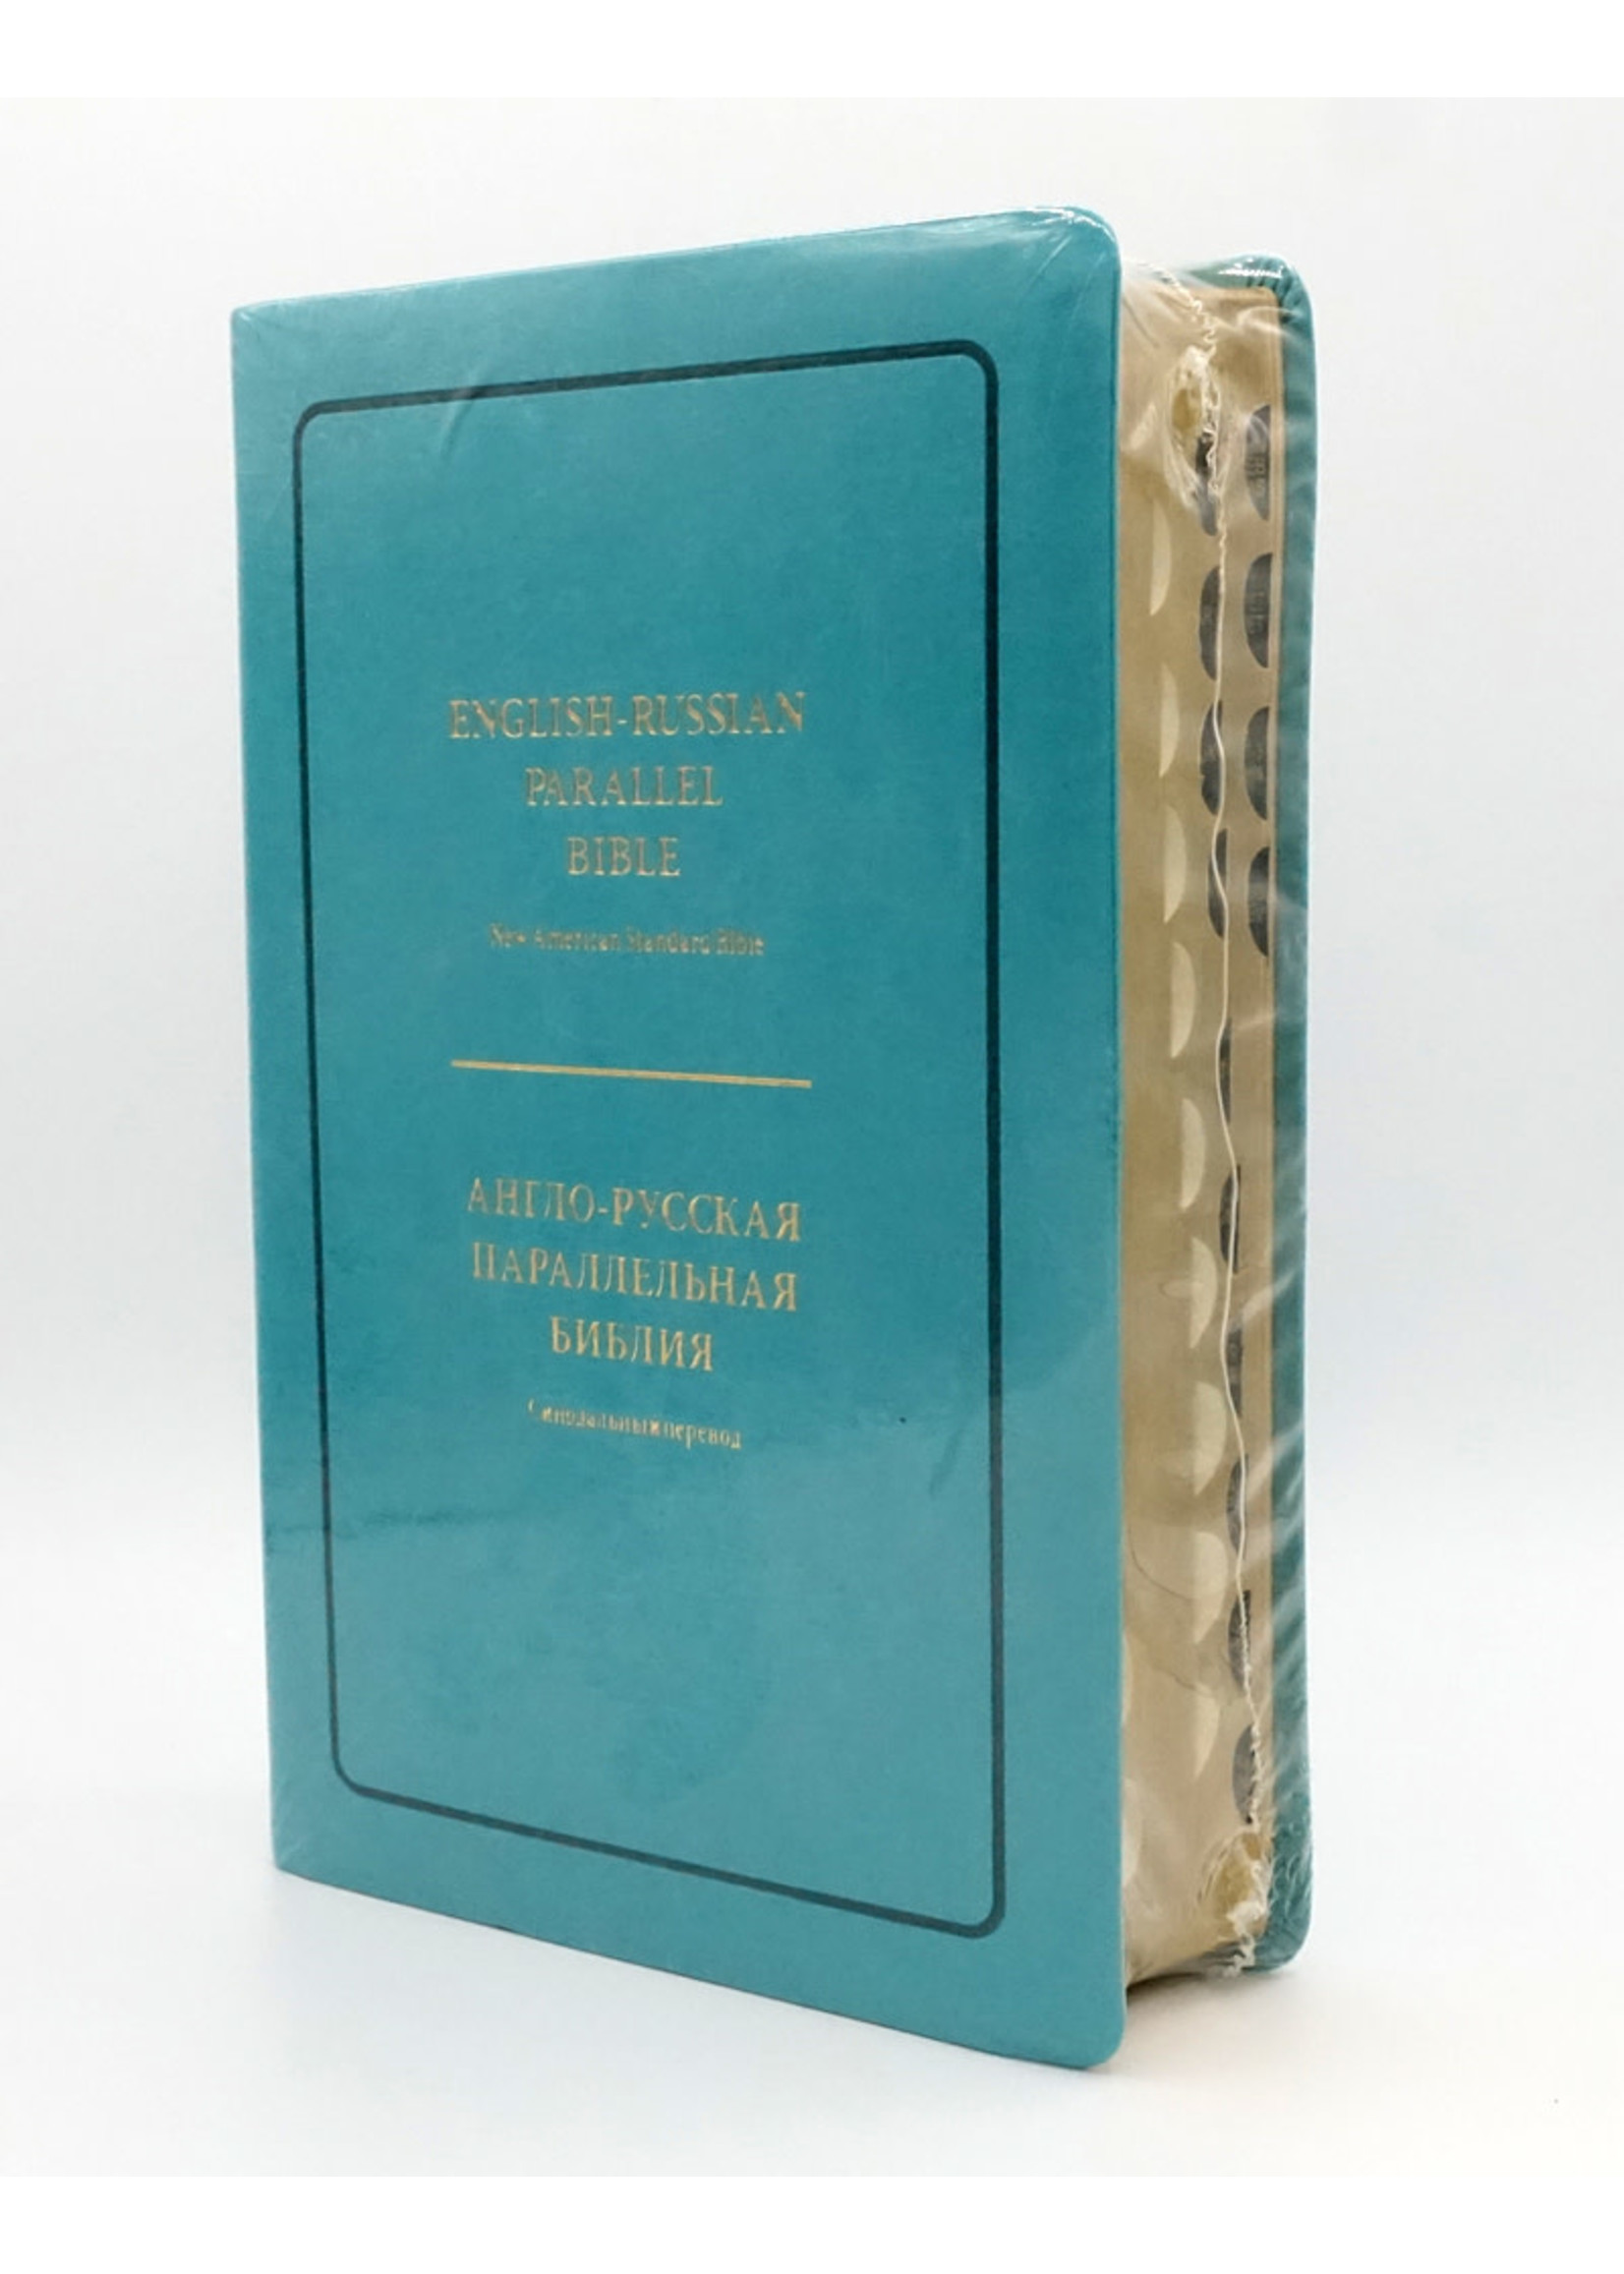 English-Russian Parallel Bible (NASB-SYNO), Index, Medium, Teal